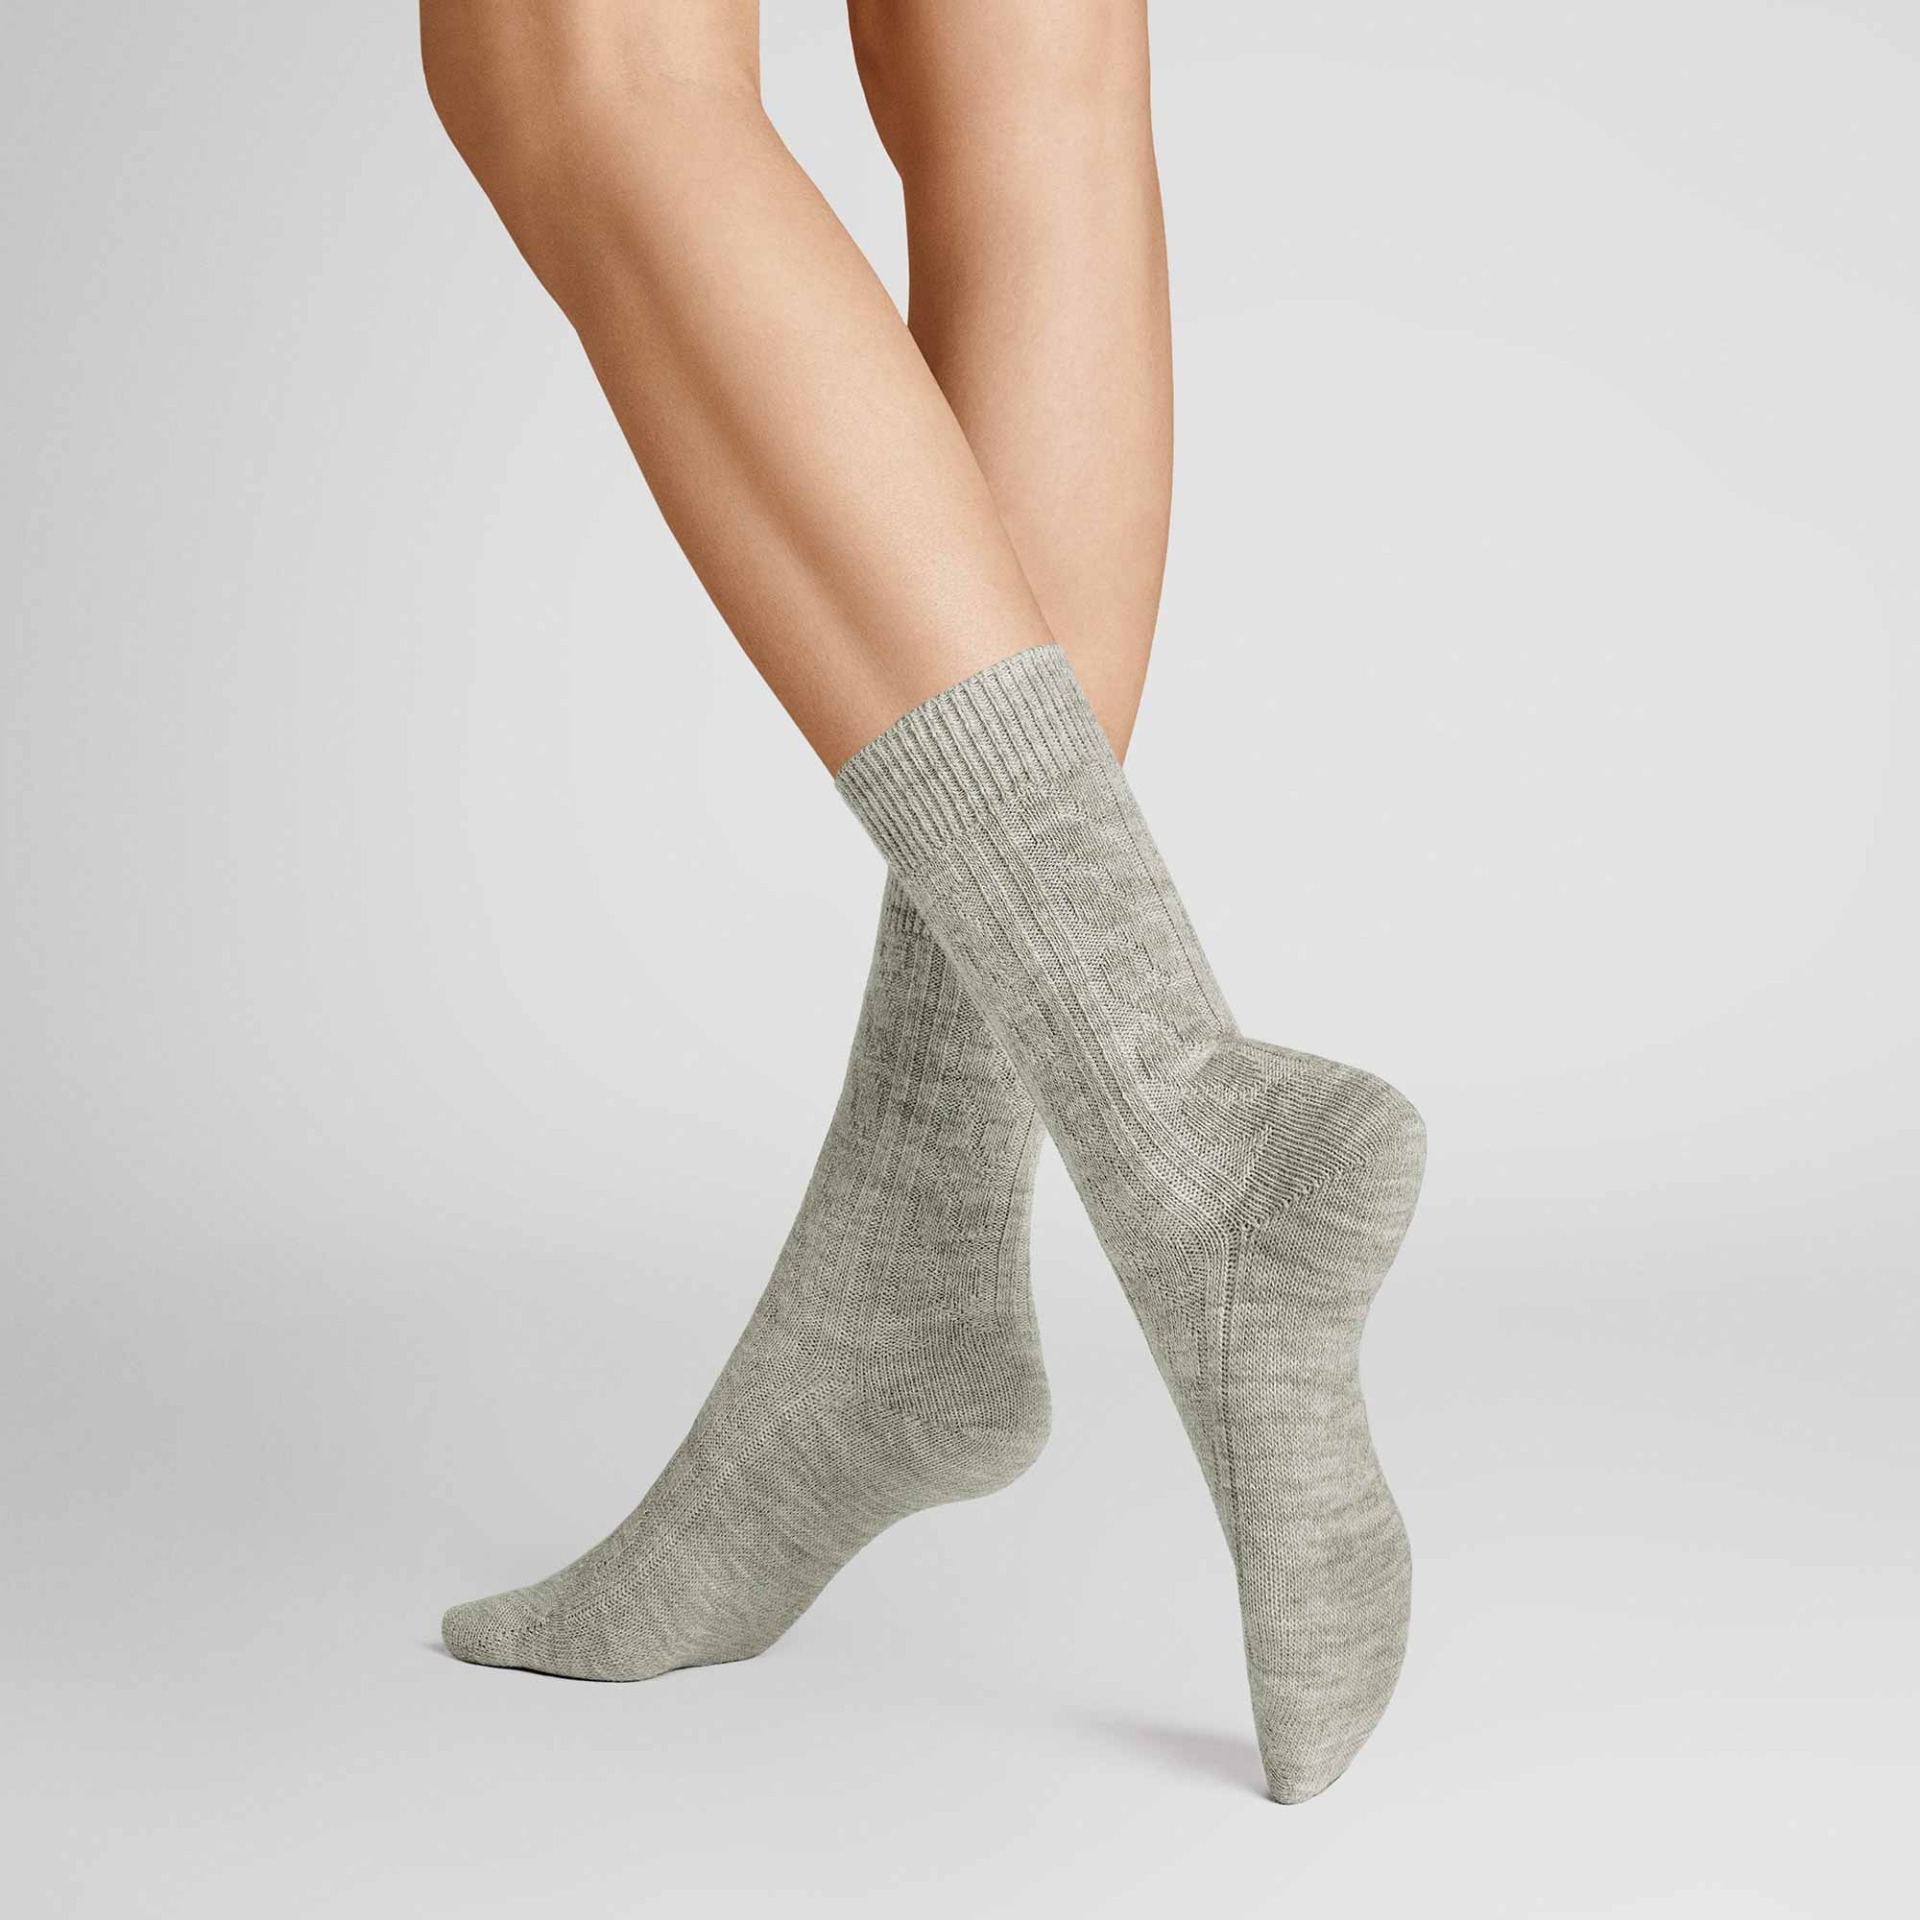 HUDSON Damen WINTER PLAIT -  35/38 - Wärmende Socken mit Zopf-Muster - Silber (Grau)